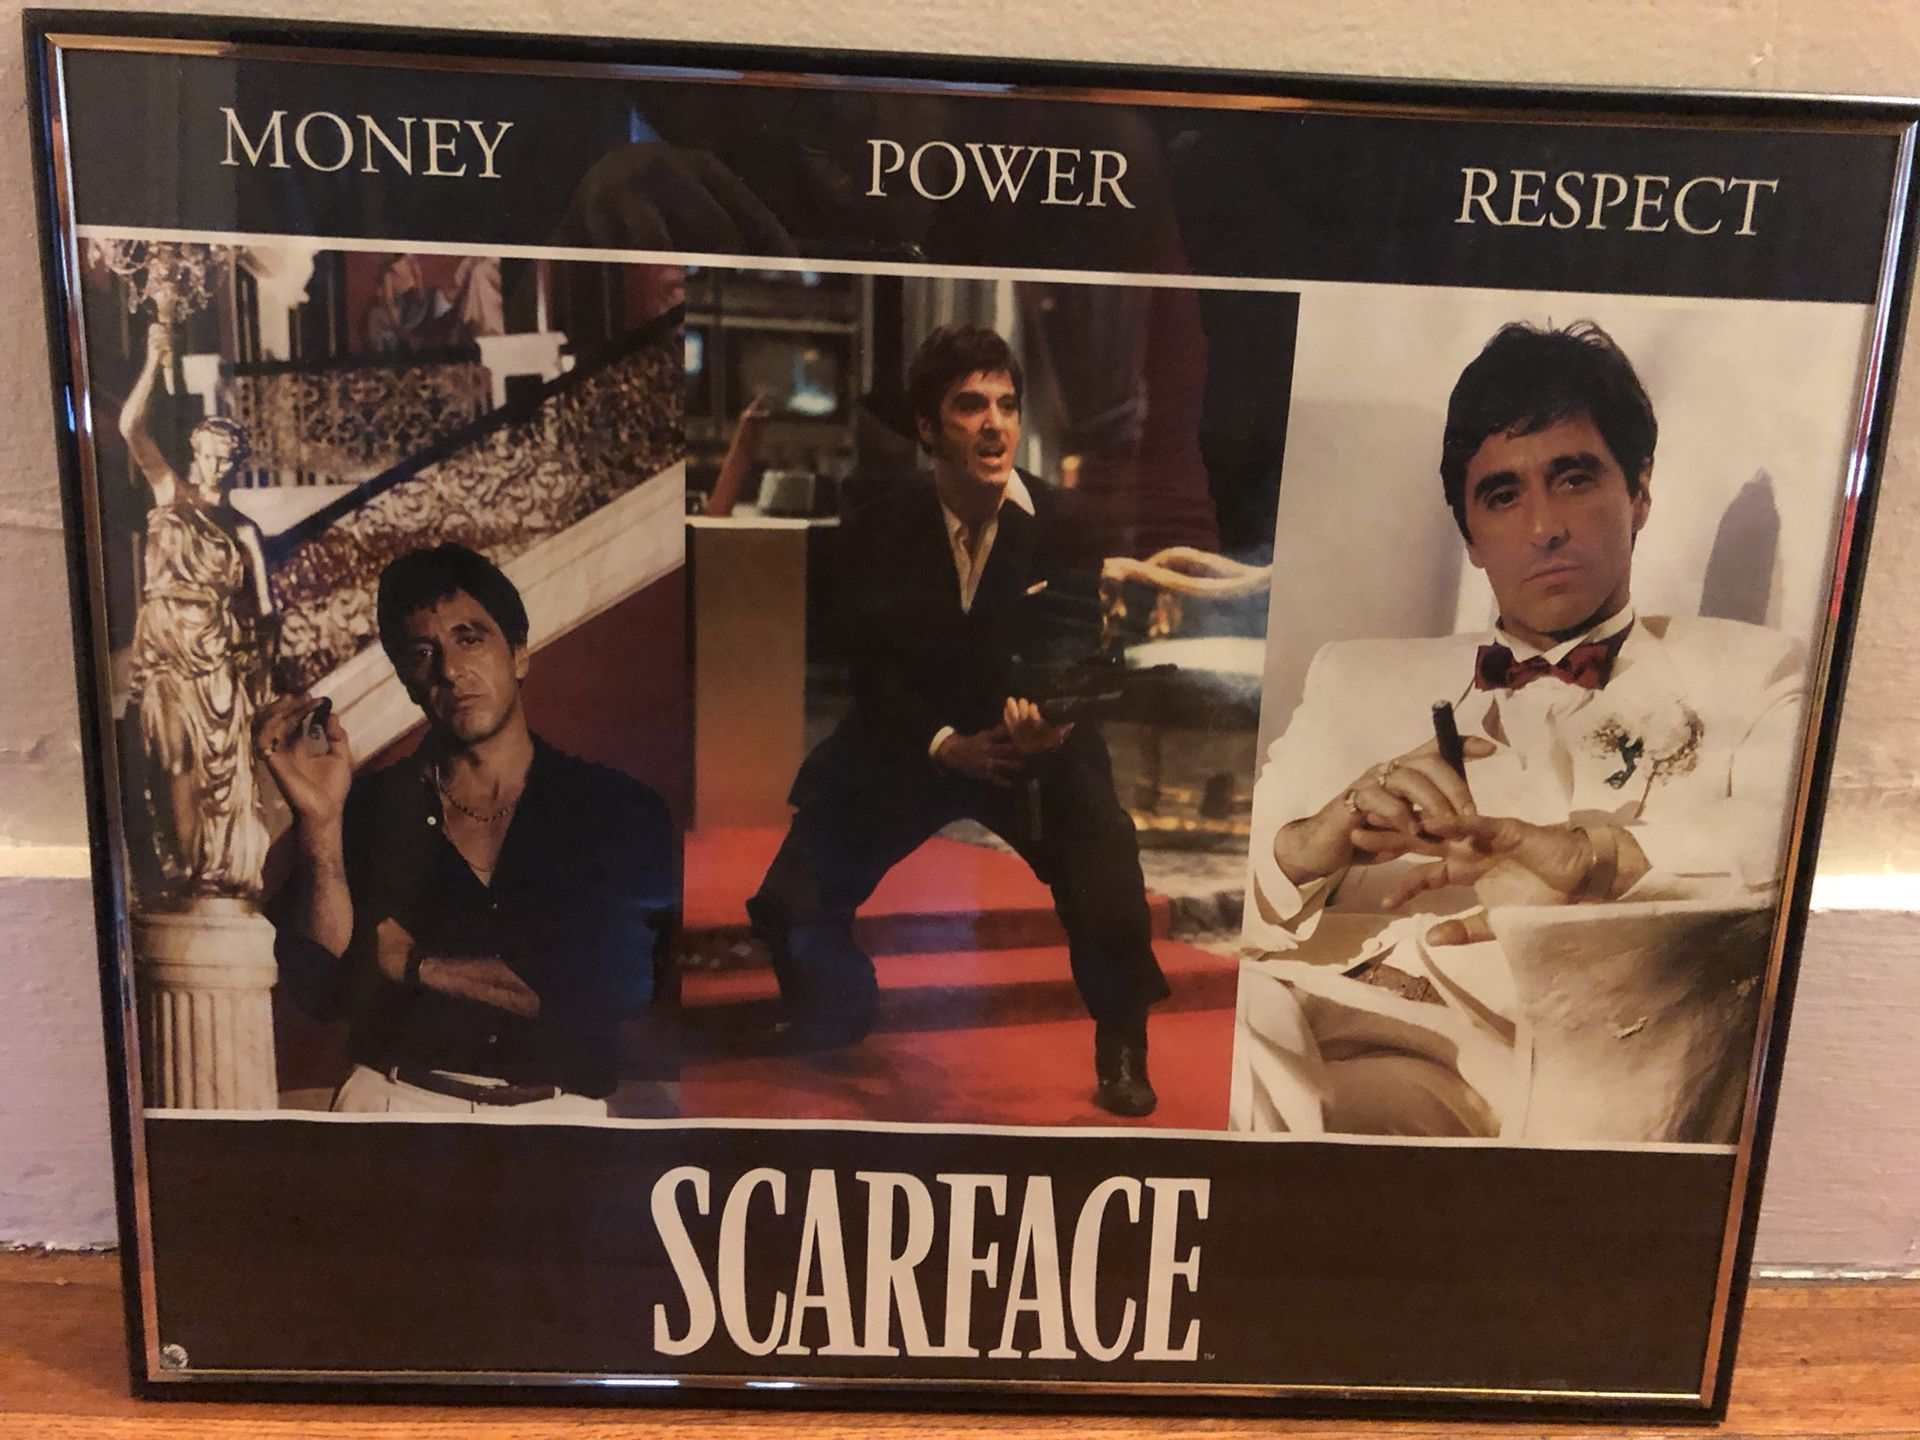 scarface money wallpaper